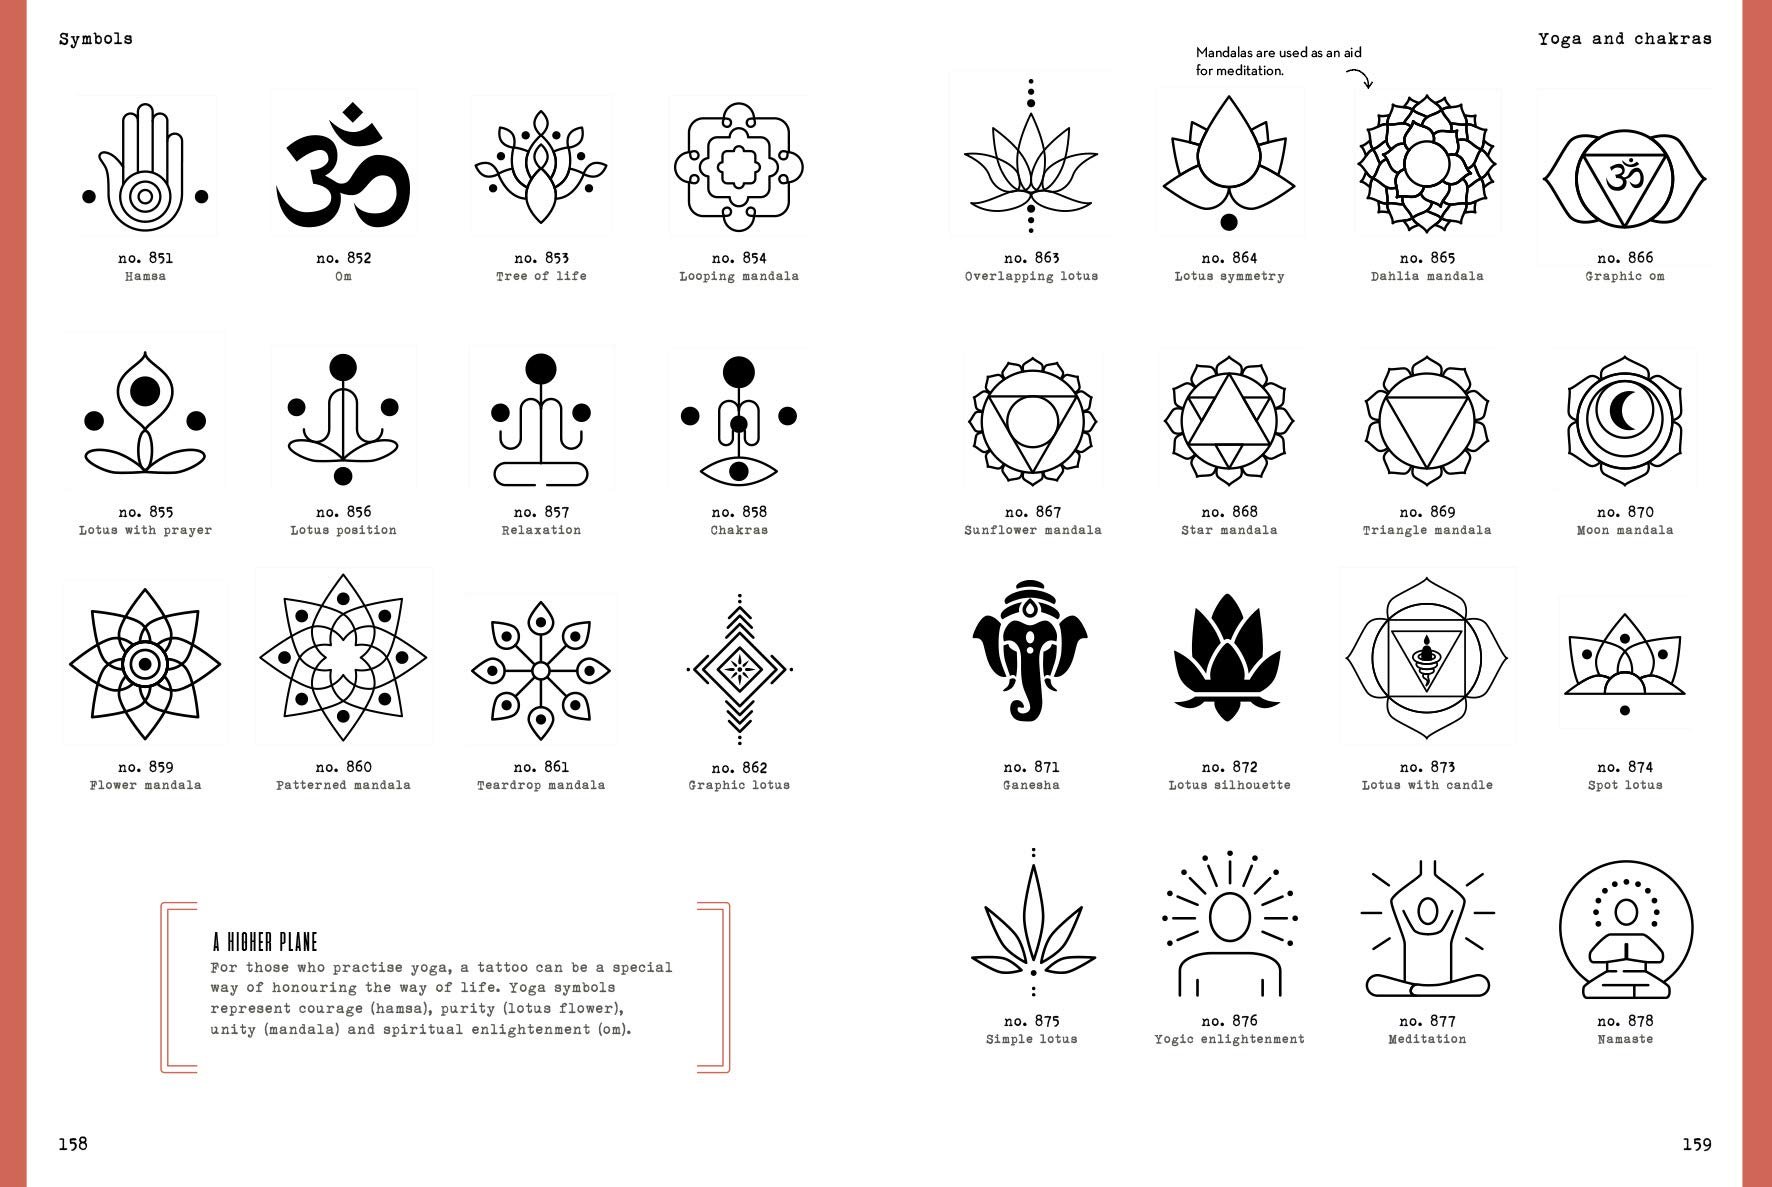 10 ideas of yoga symbol tattoos perfect for yogis